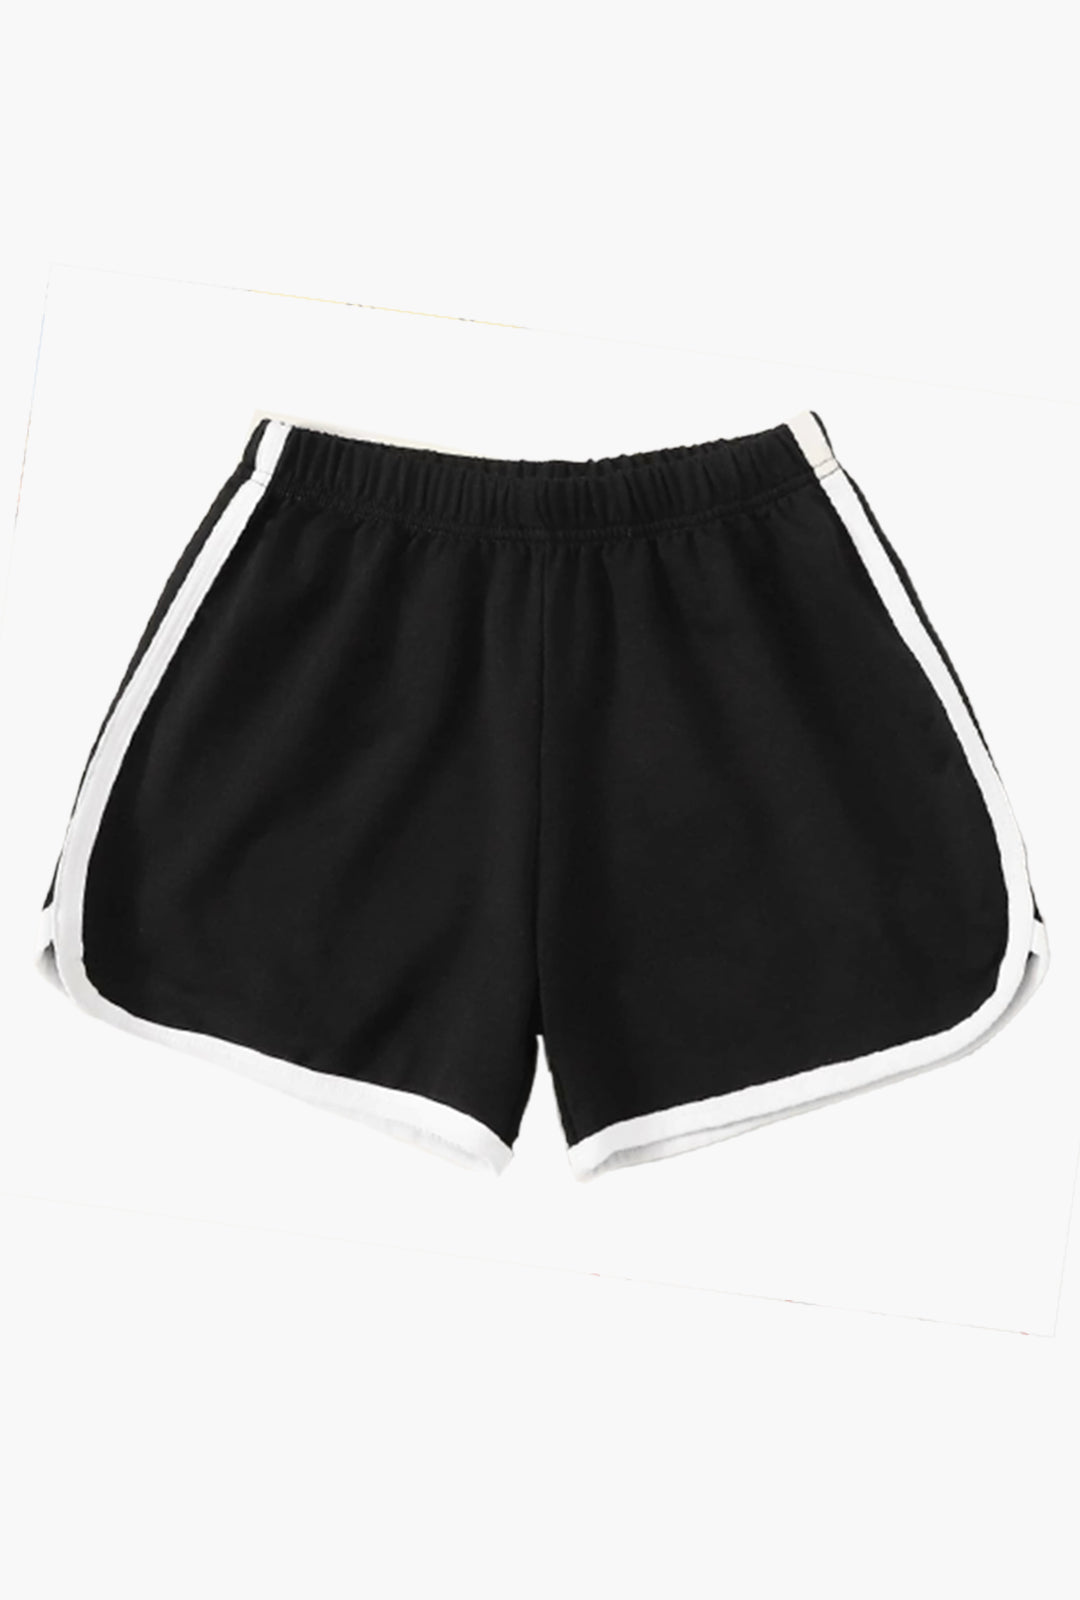 Black Athletic Striped Shorts Perth